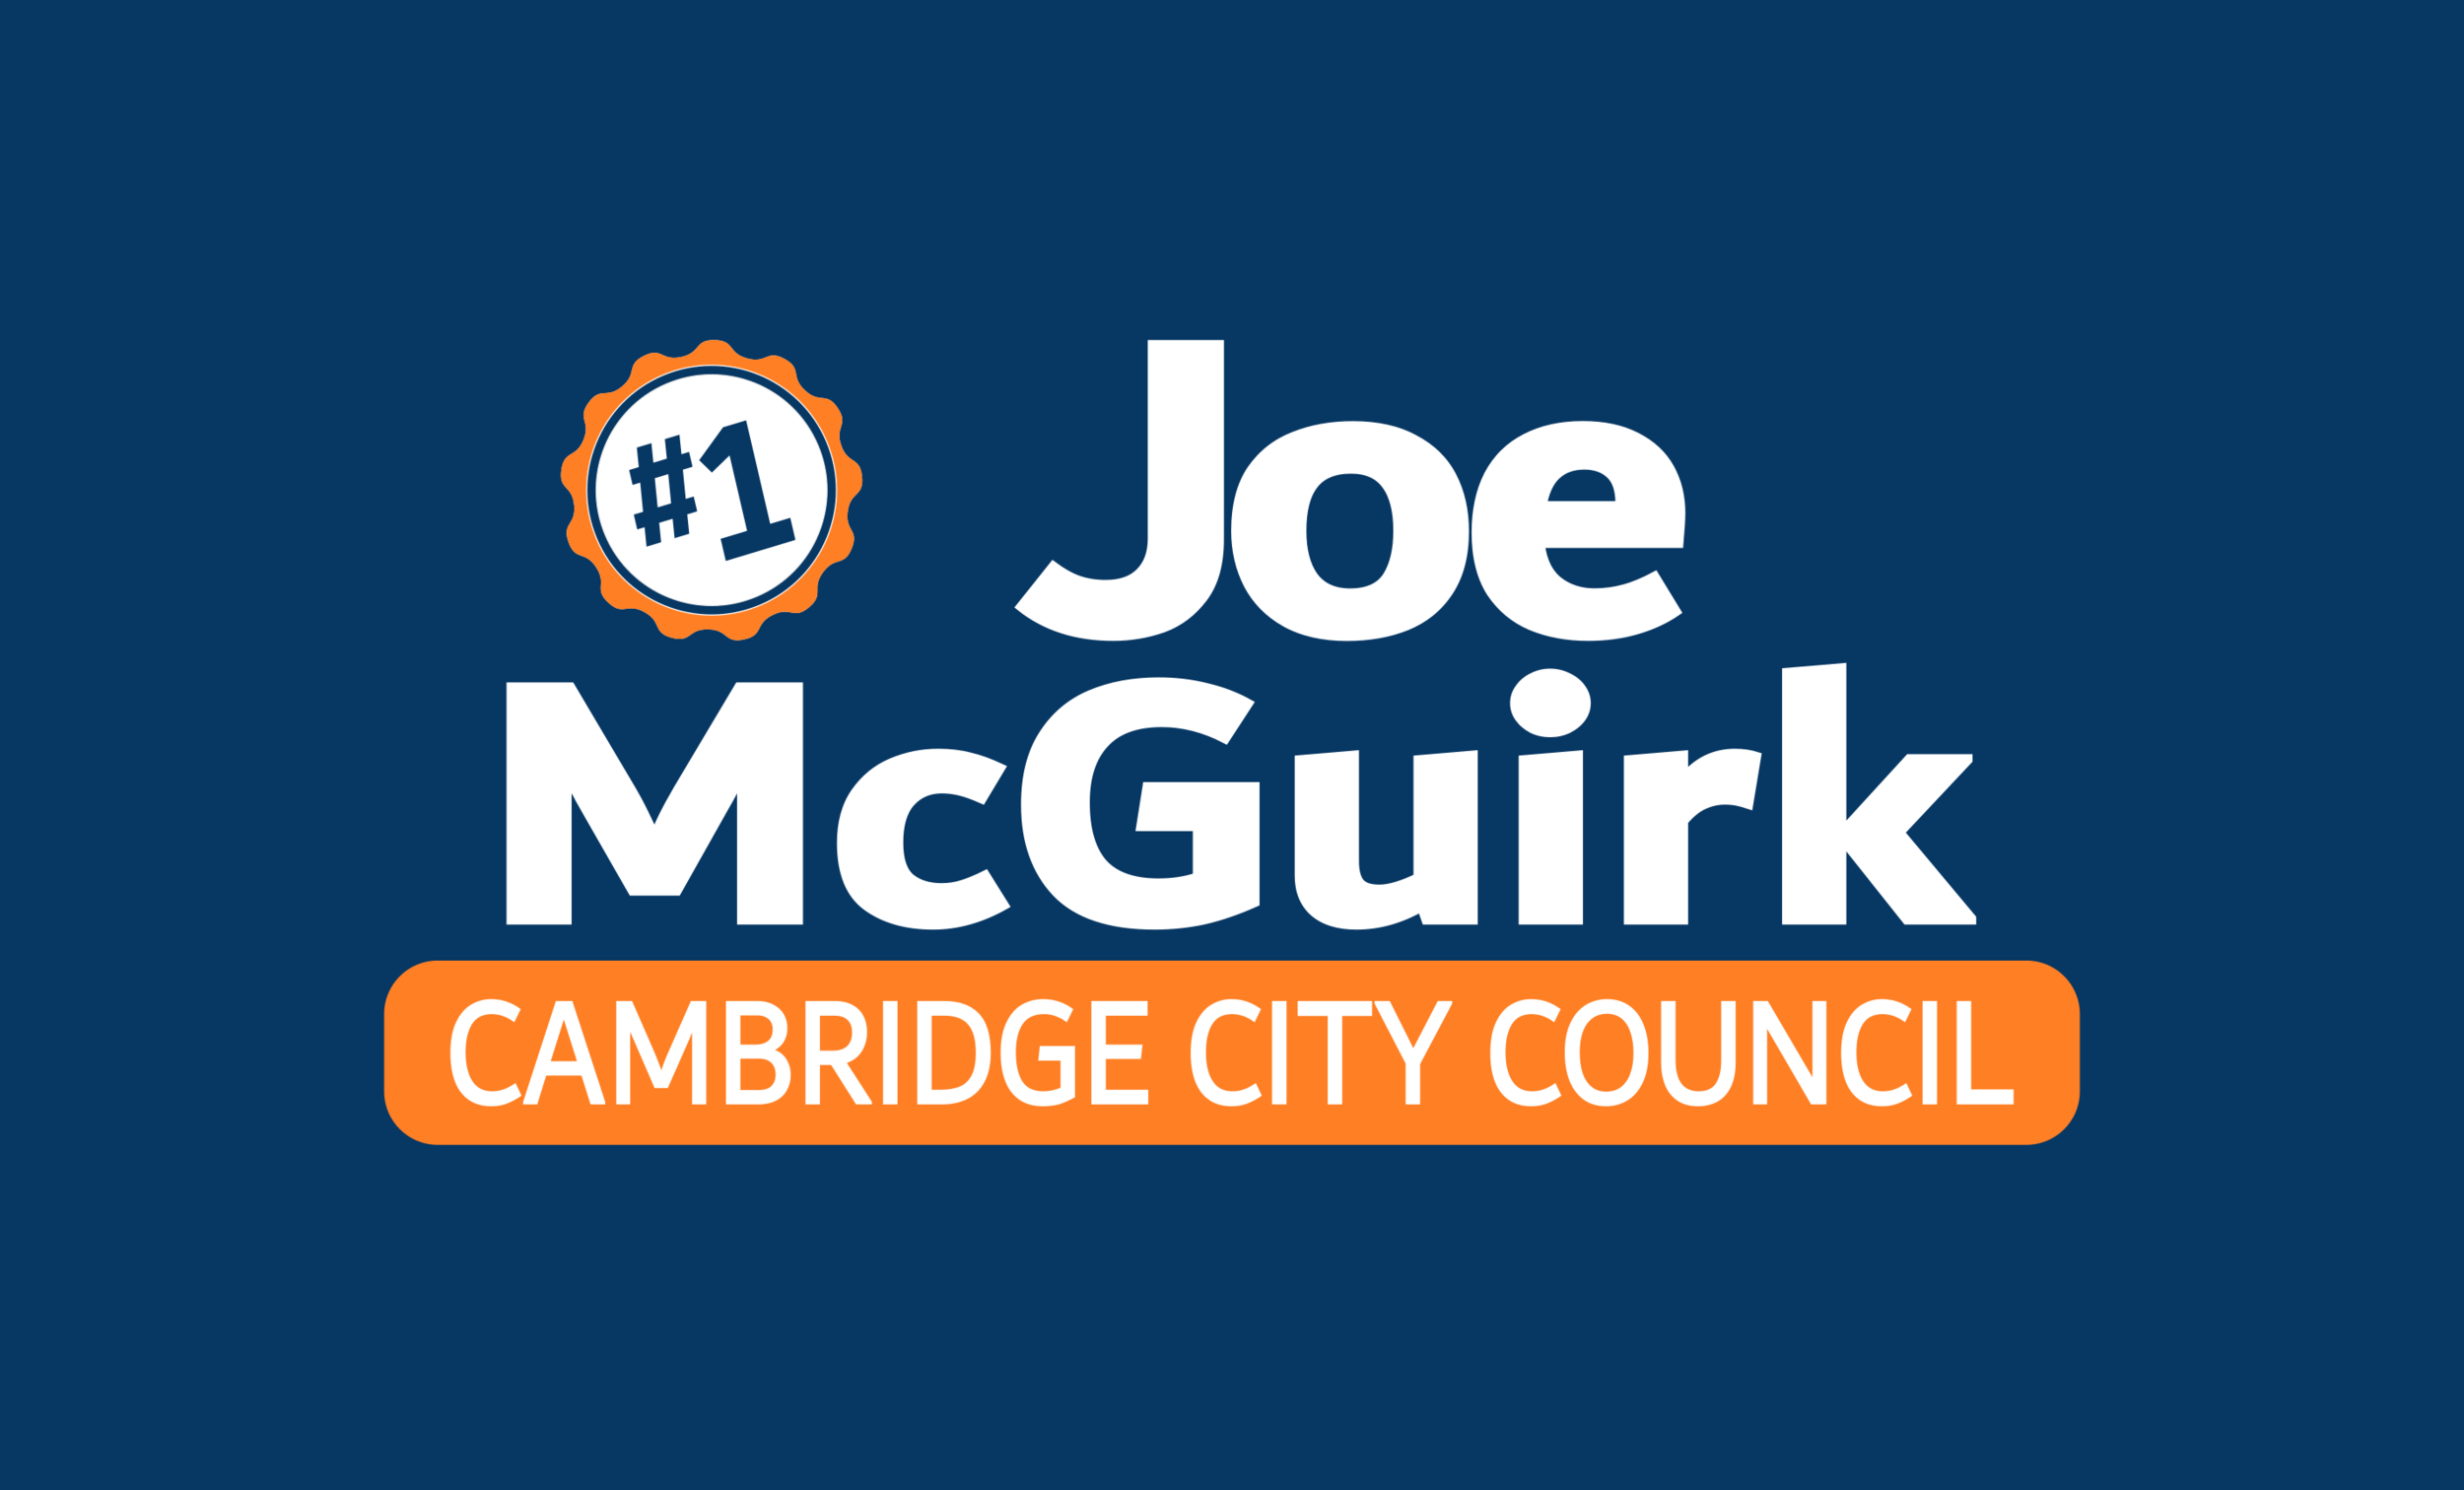 12. Paul Toner, Candidate for Cambridge City Council 